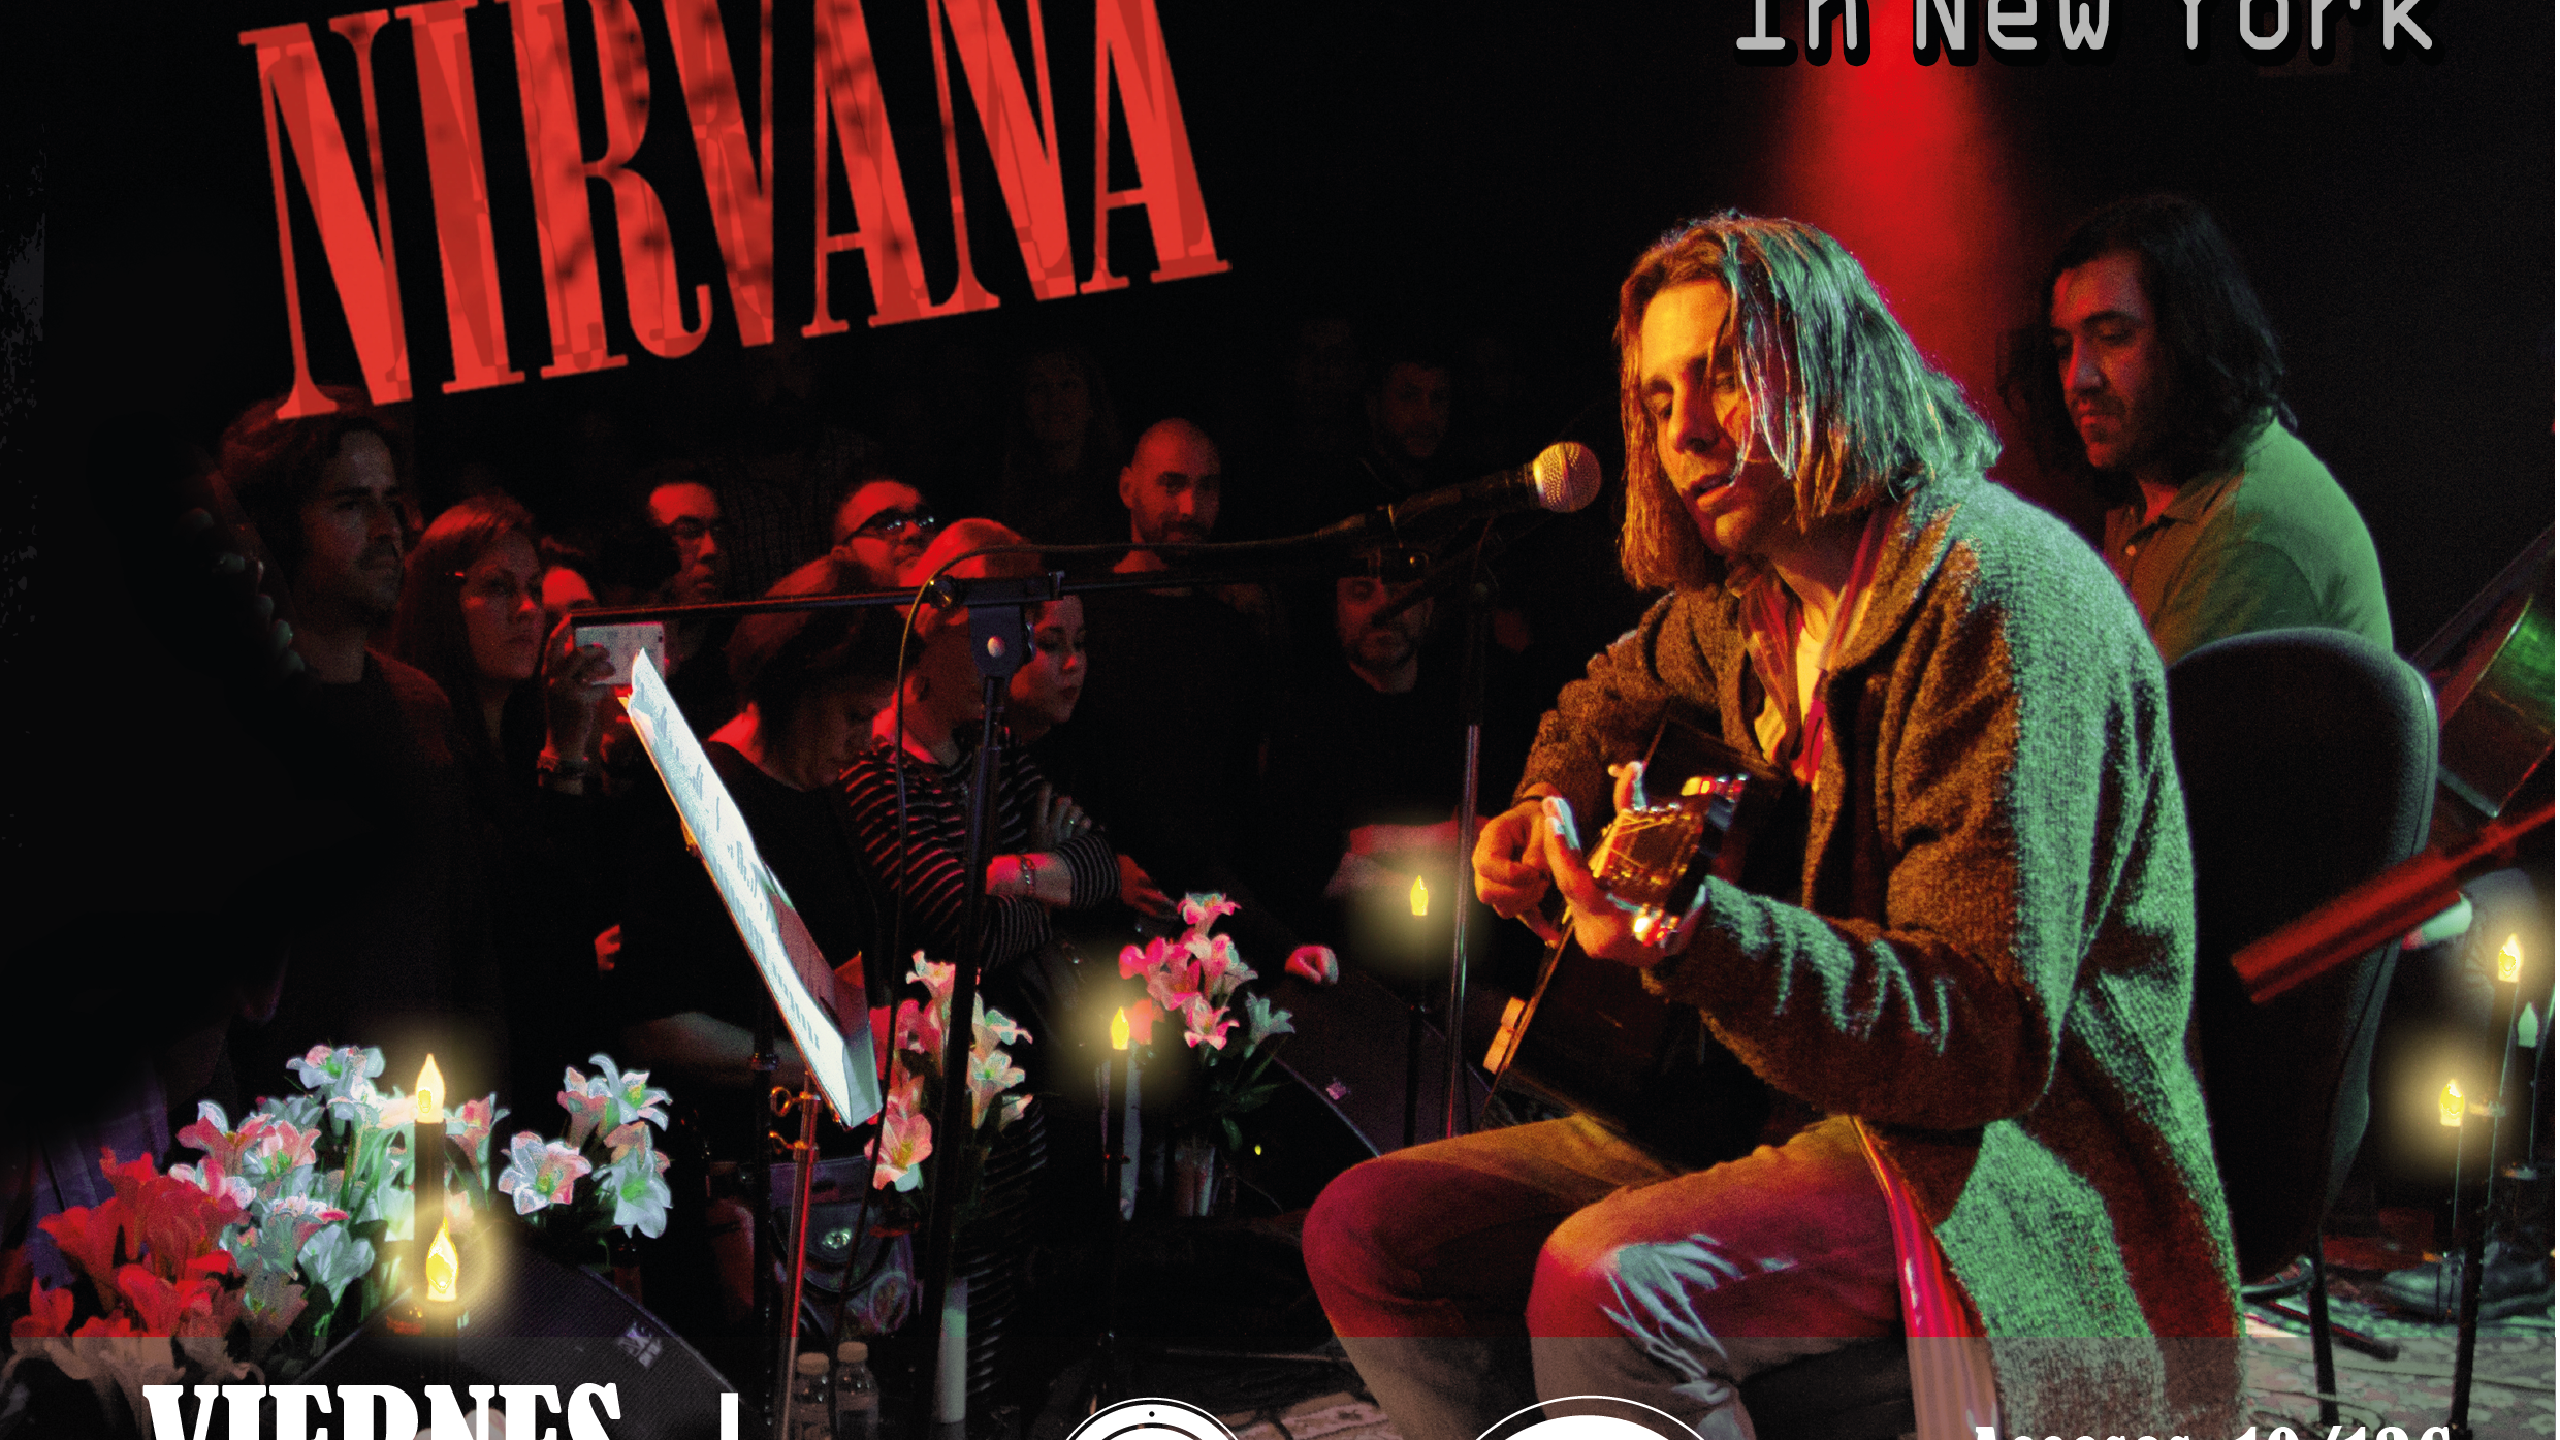 Nirvana Concert. The Buzz lovers группа. Nirvana концерт. Nirvana концерт 1386. Nirvana buzz